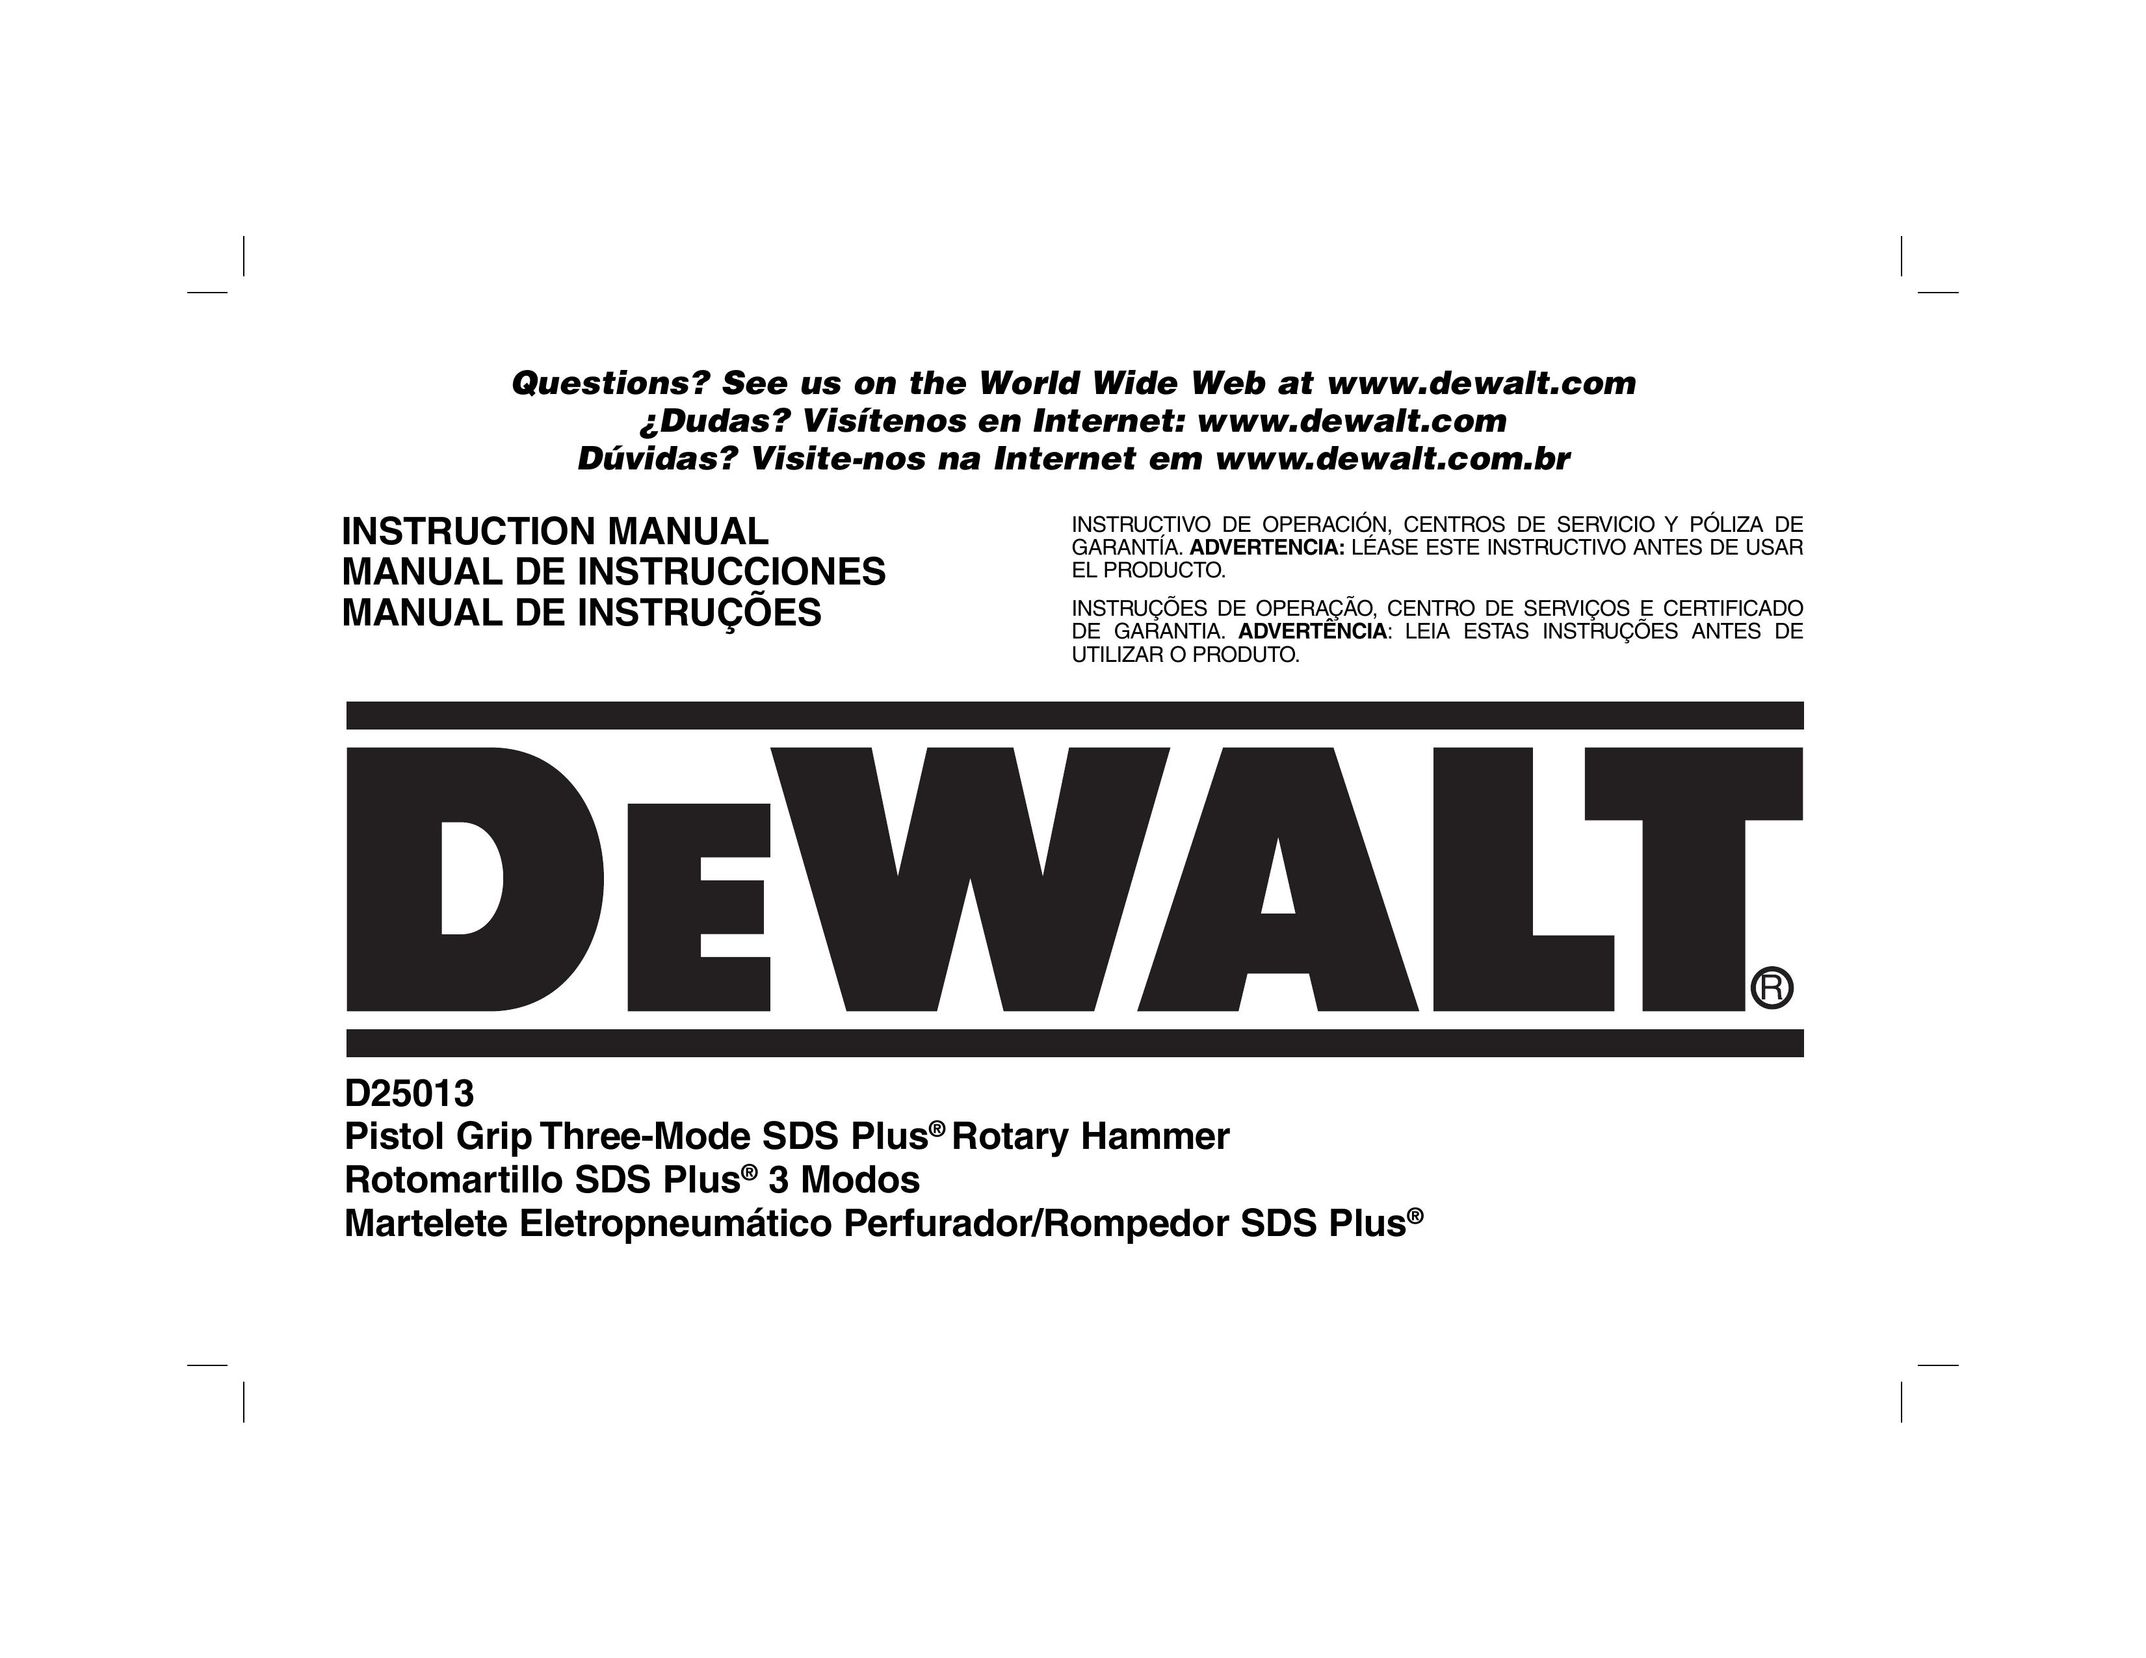 DeWalt D25013 Power Hammer User Manual (Page 1)